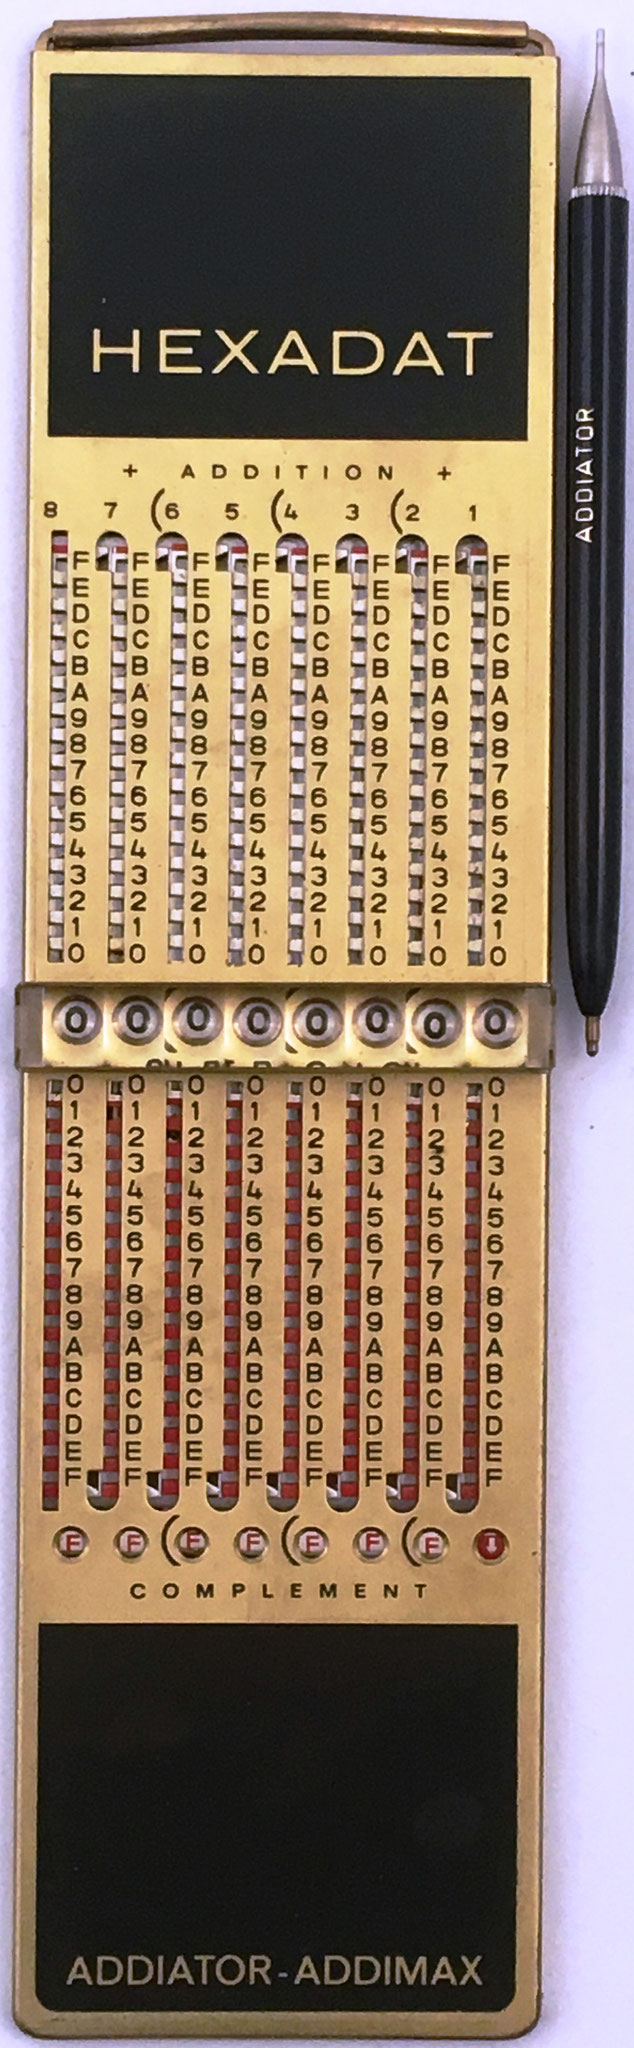 Addiator-Addimax HEXADAT base 16 (o hexadecimal), fabricado en Alemania, año 1967, s/n 694714, 6x23 cm